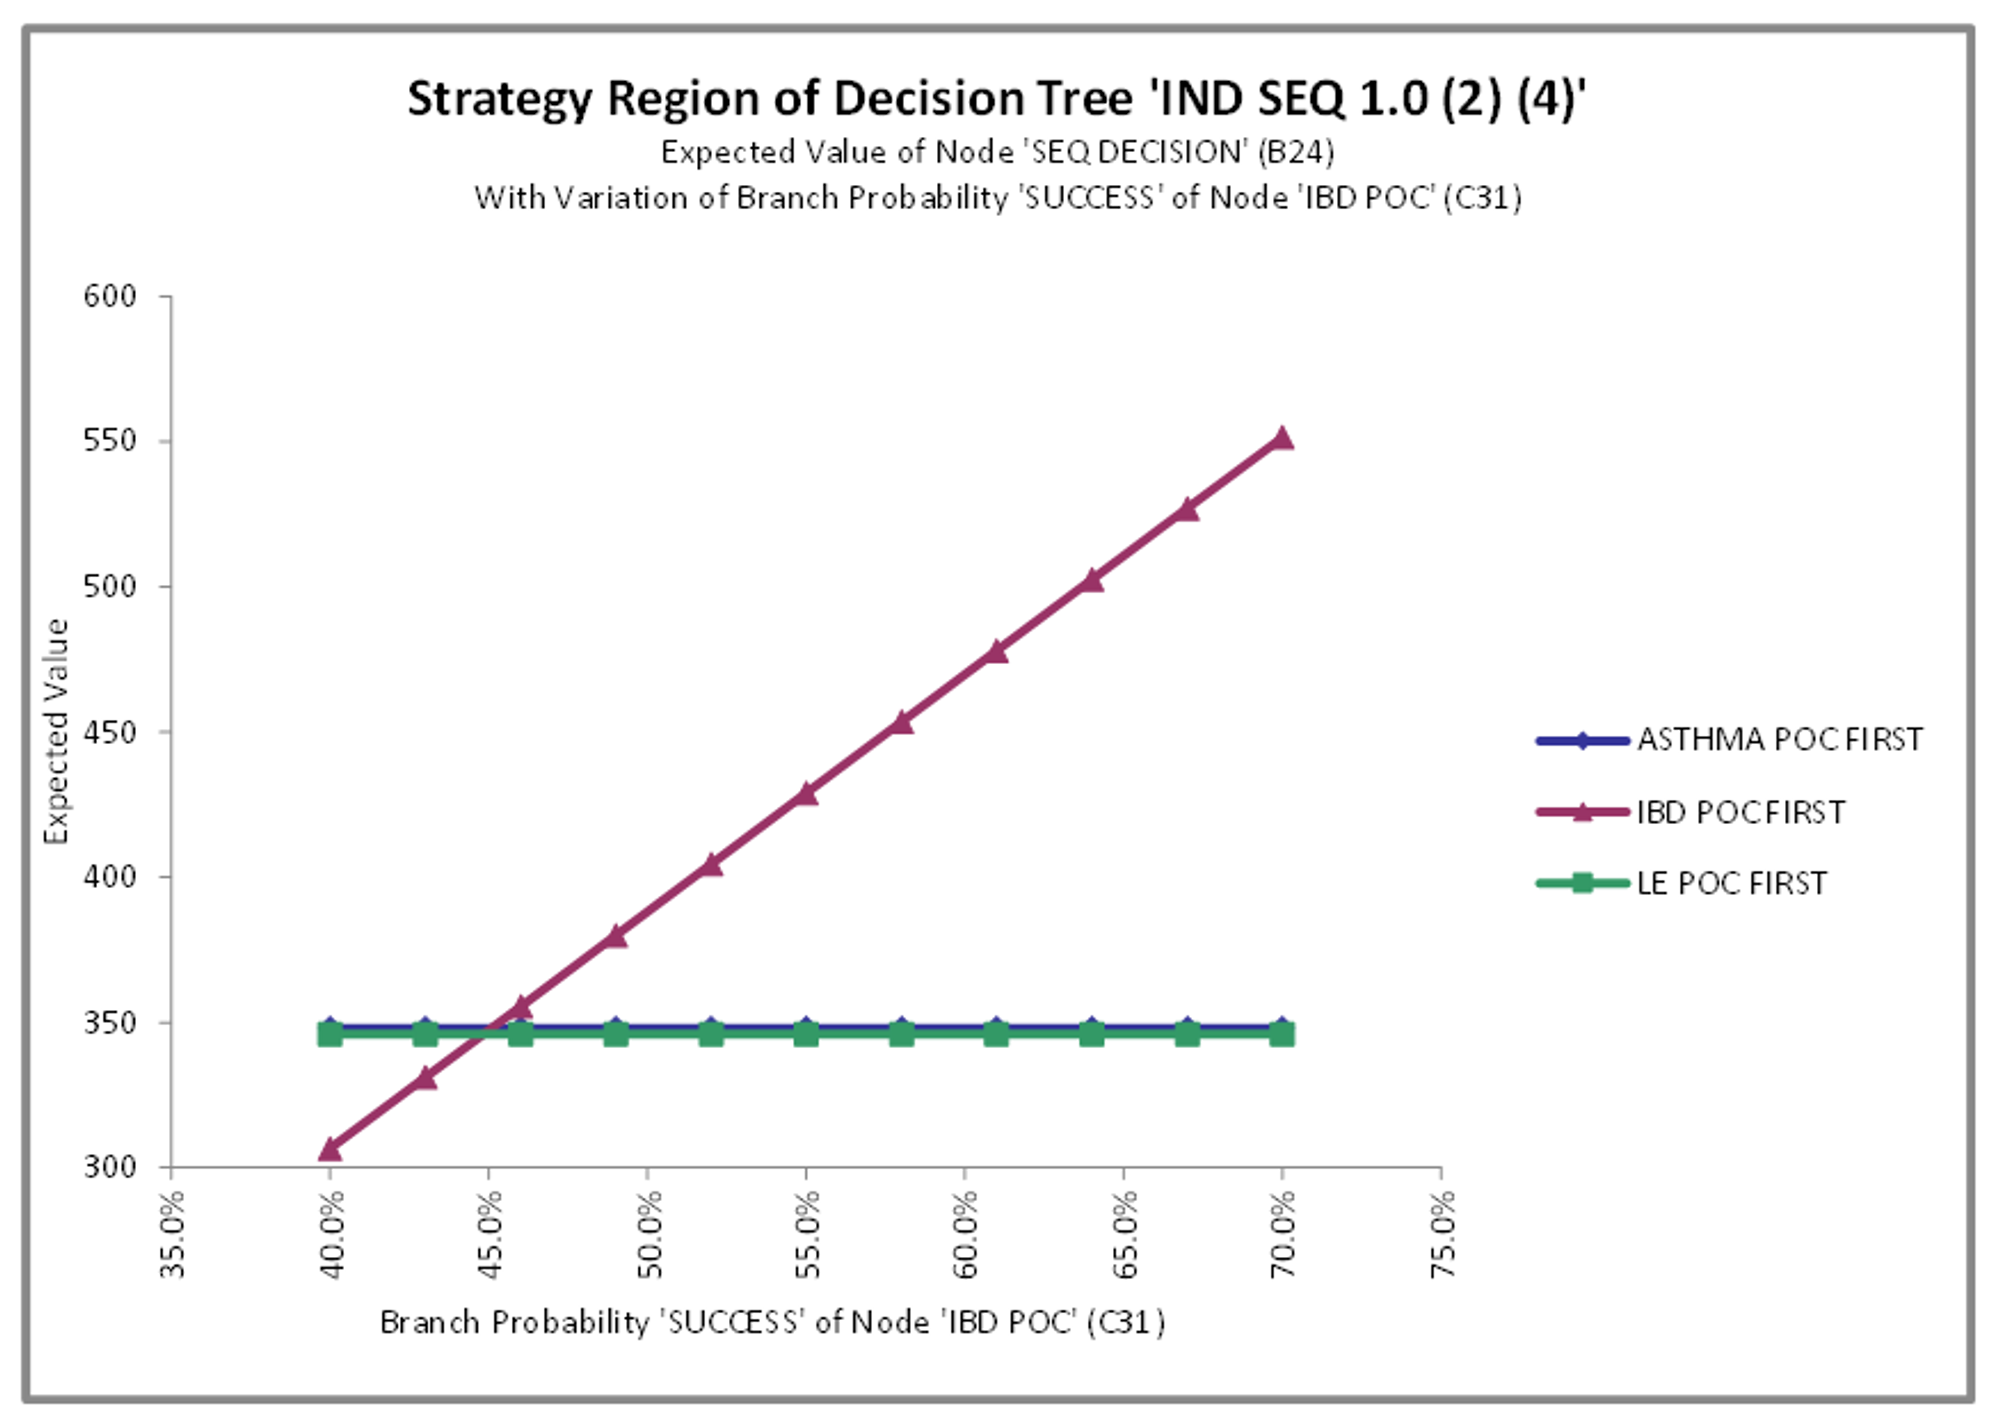 Strategy Region of Decision Tree “IND SEQ 1.0 (2) (4)’. Sensitivity analysis to IBD POC probability of success (POS).